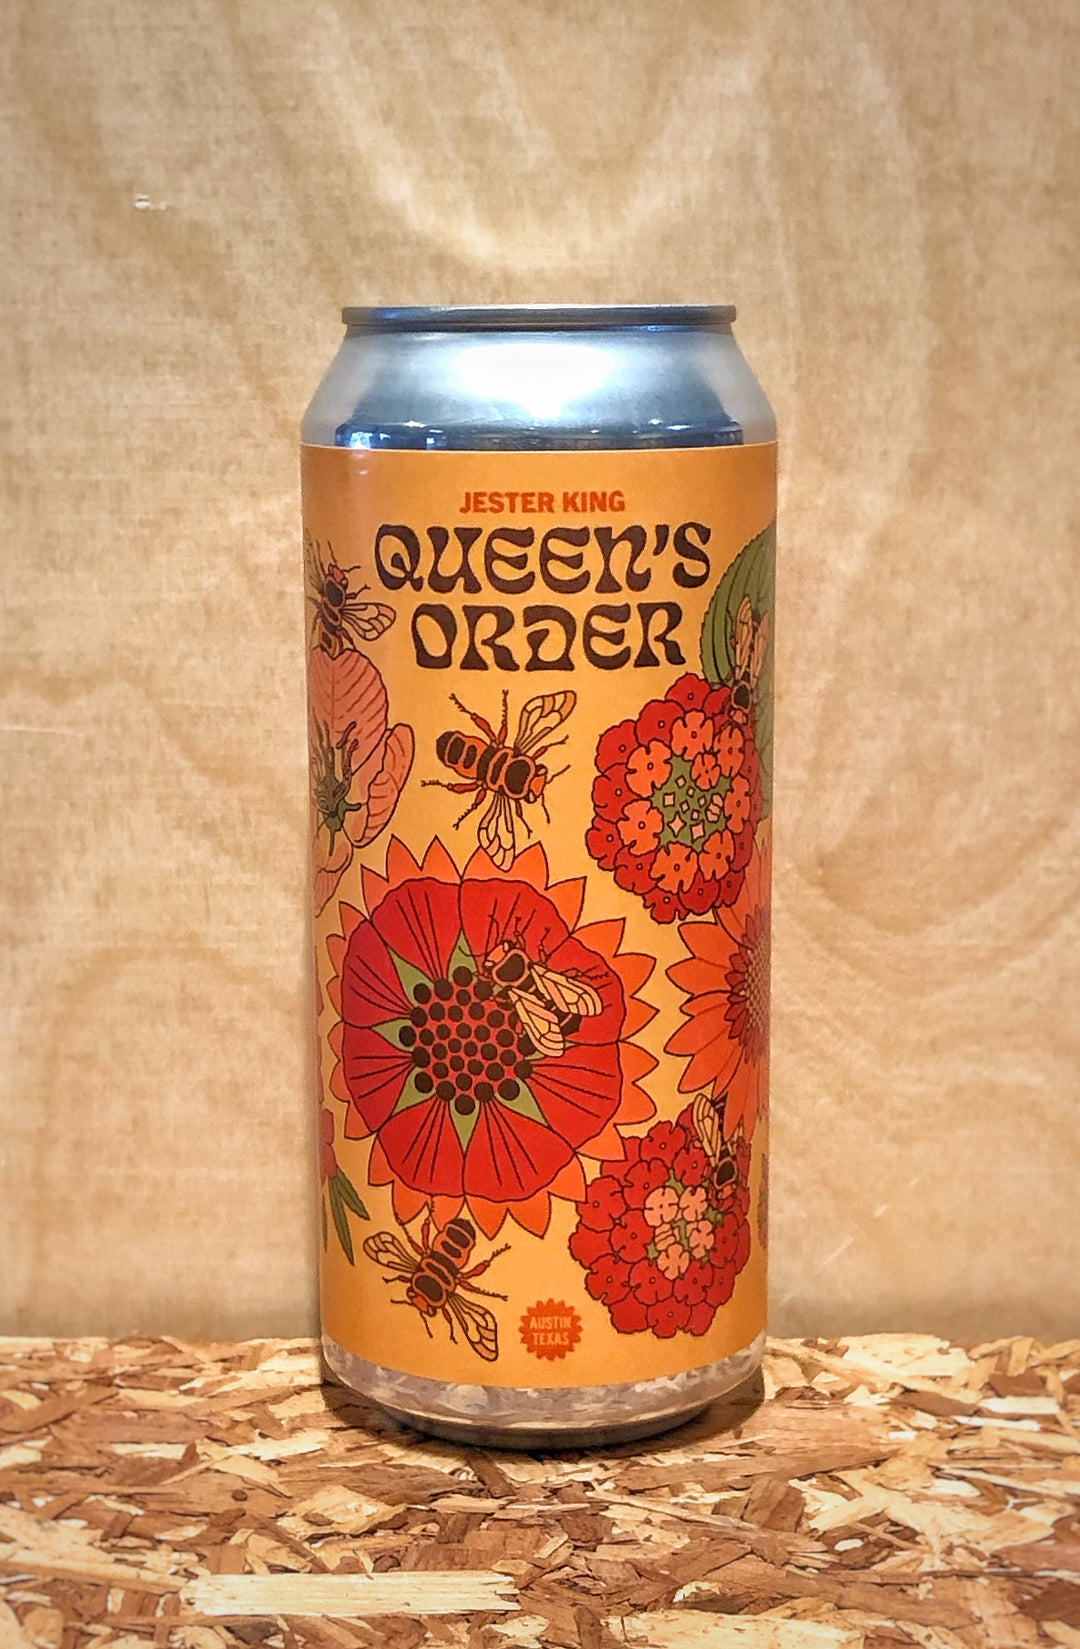 Jester King 'Queen's Order' Farmhouse Ale brewed with Honey & Lemon Peel (Austin, TX)